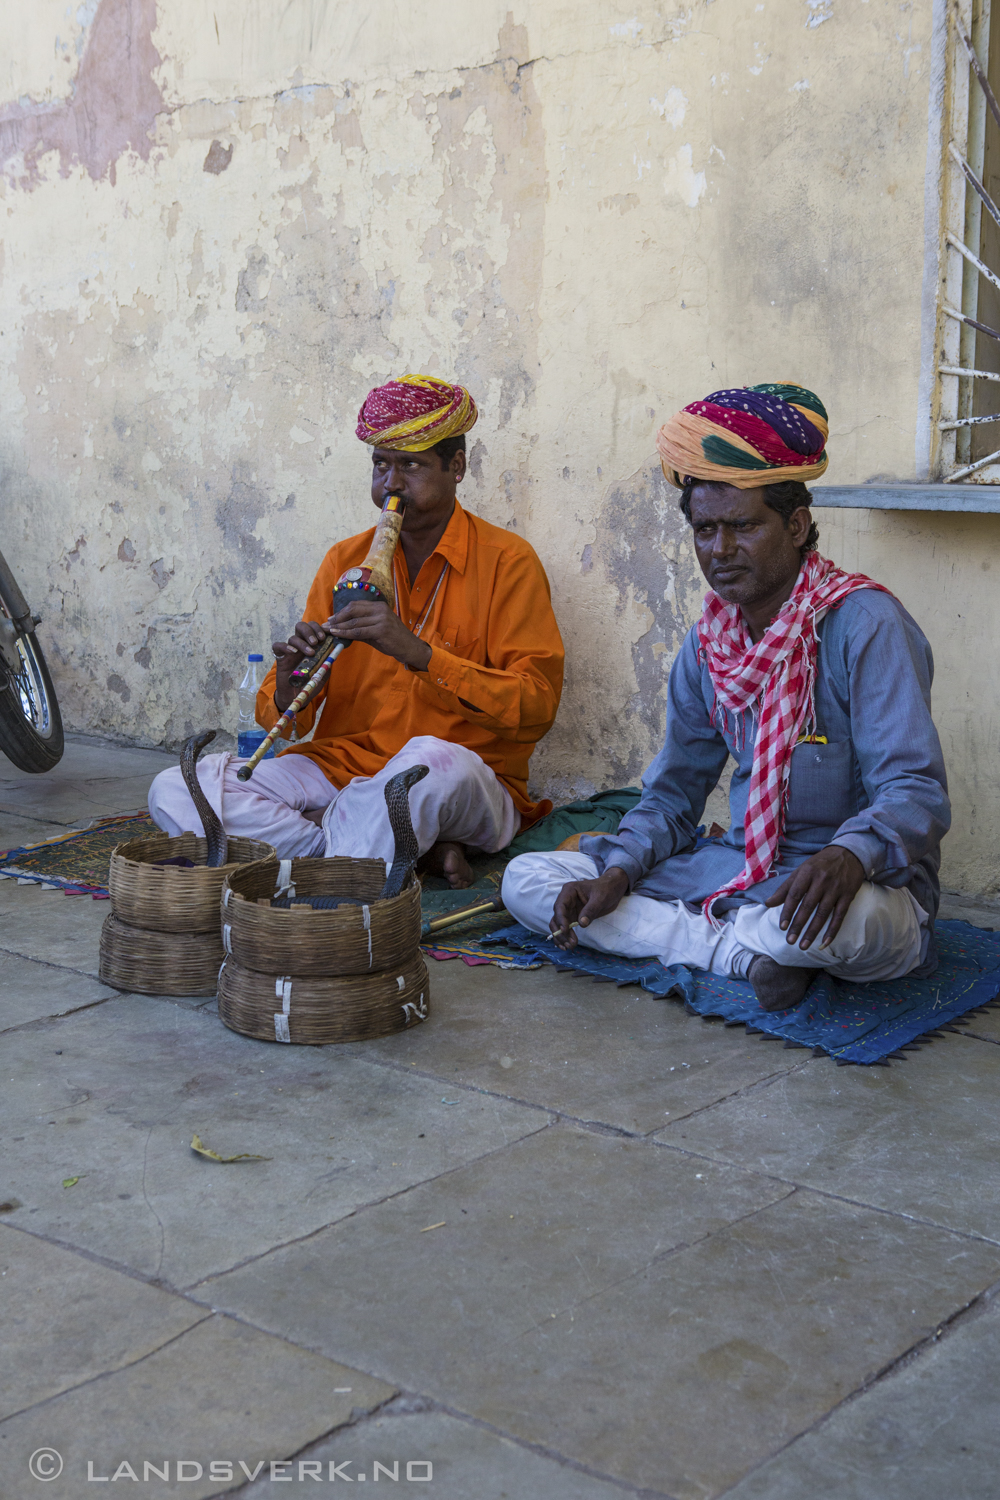 Jaipur, India. 

(Canon EOS 5D Mark III / Canon EF 24-70mm f/2.8 L USM)